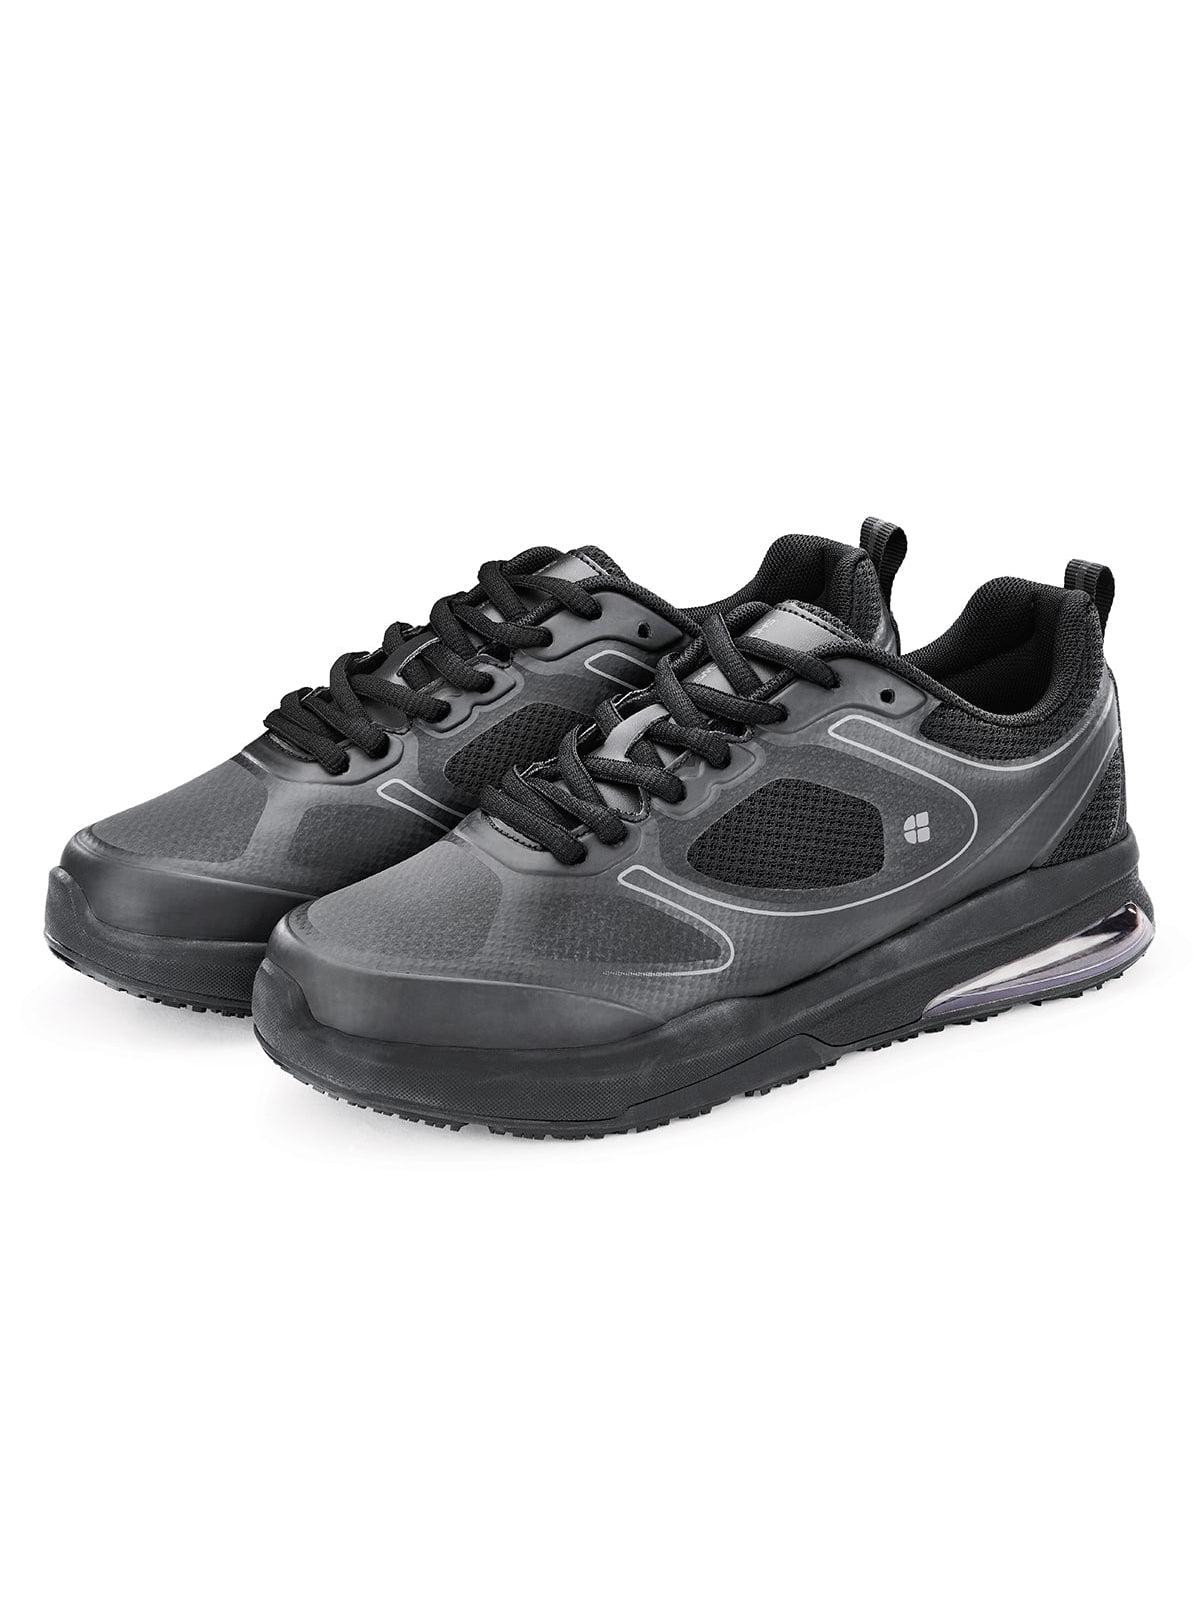 Men's Work Shoe Evolution Ii Black by  Shoes For Crews.